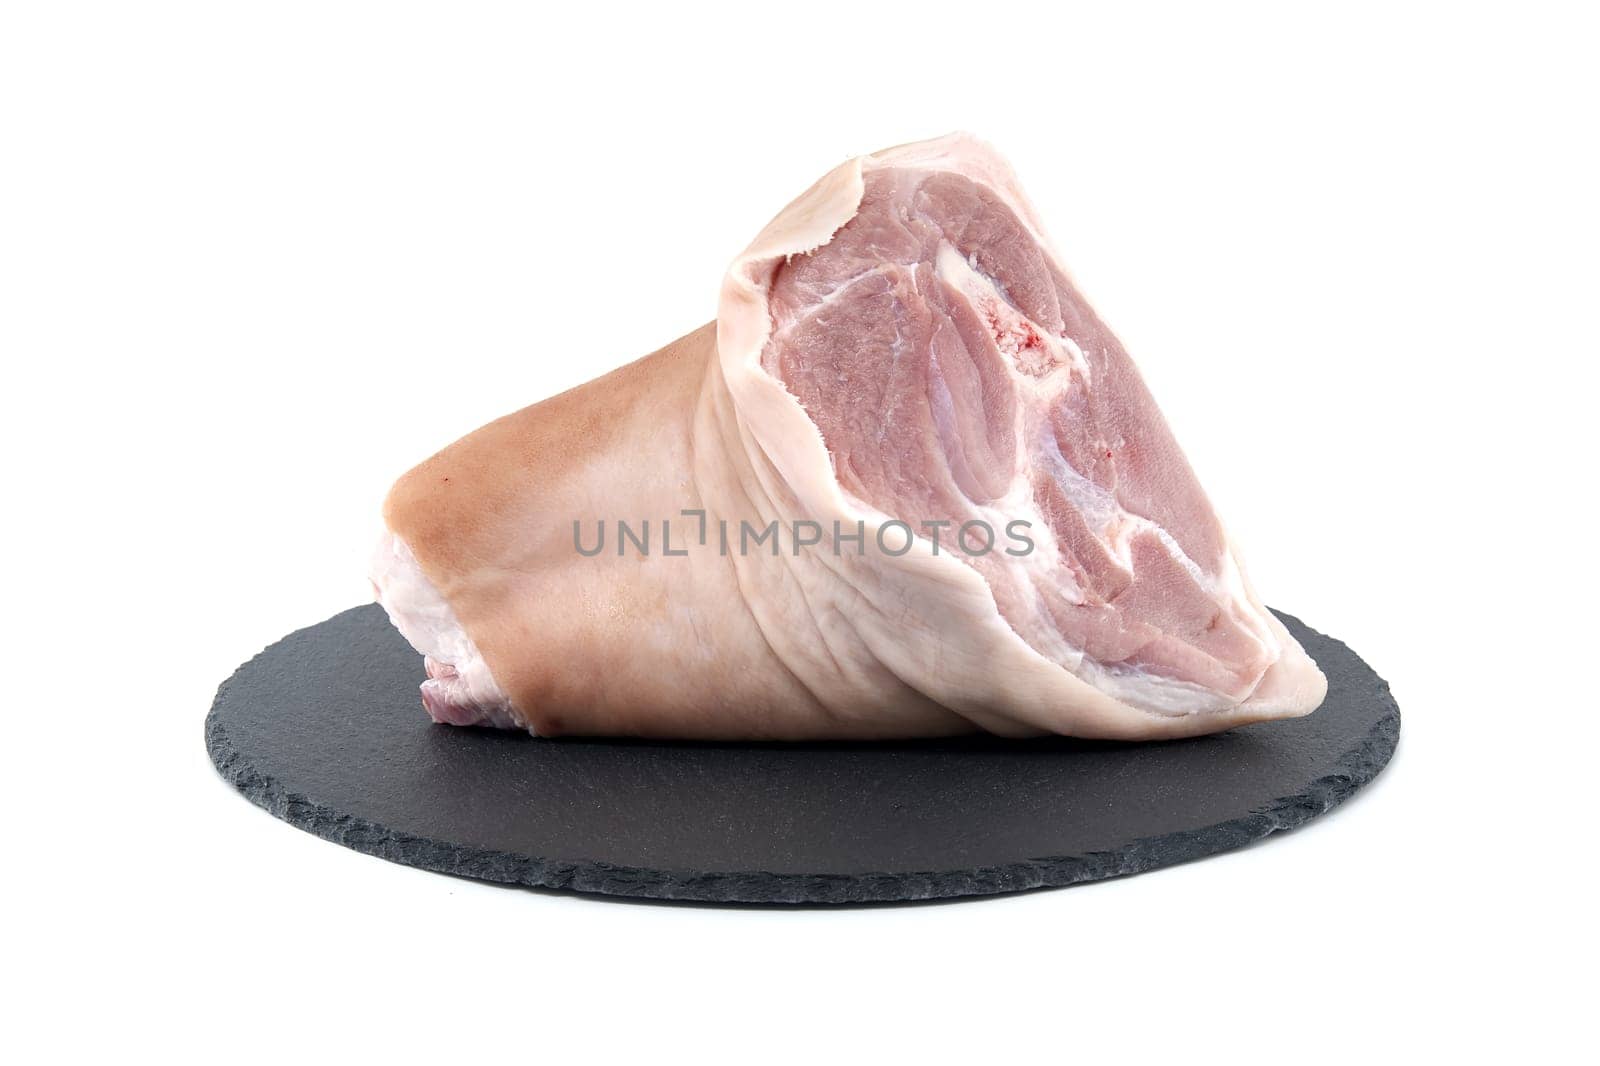 Pork shank on black stone plate over white by NetPix